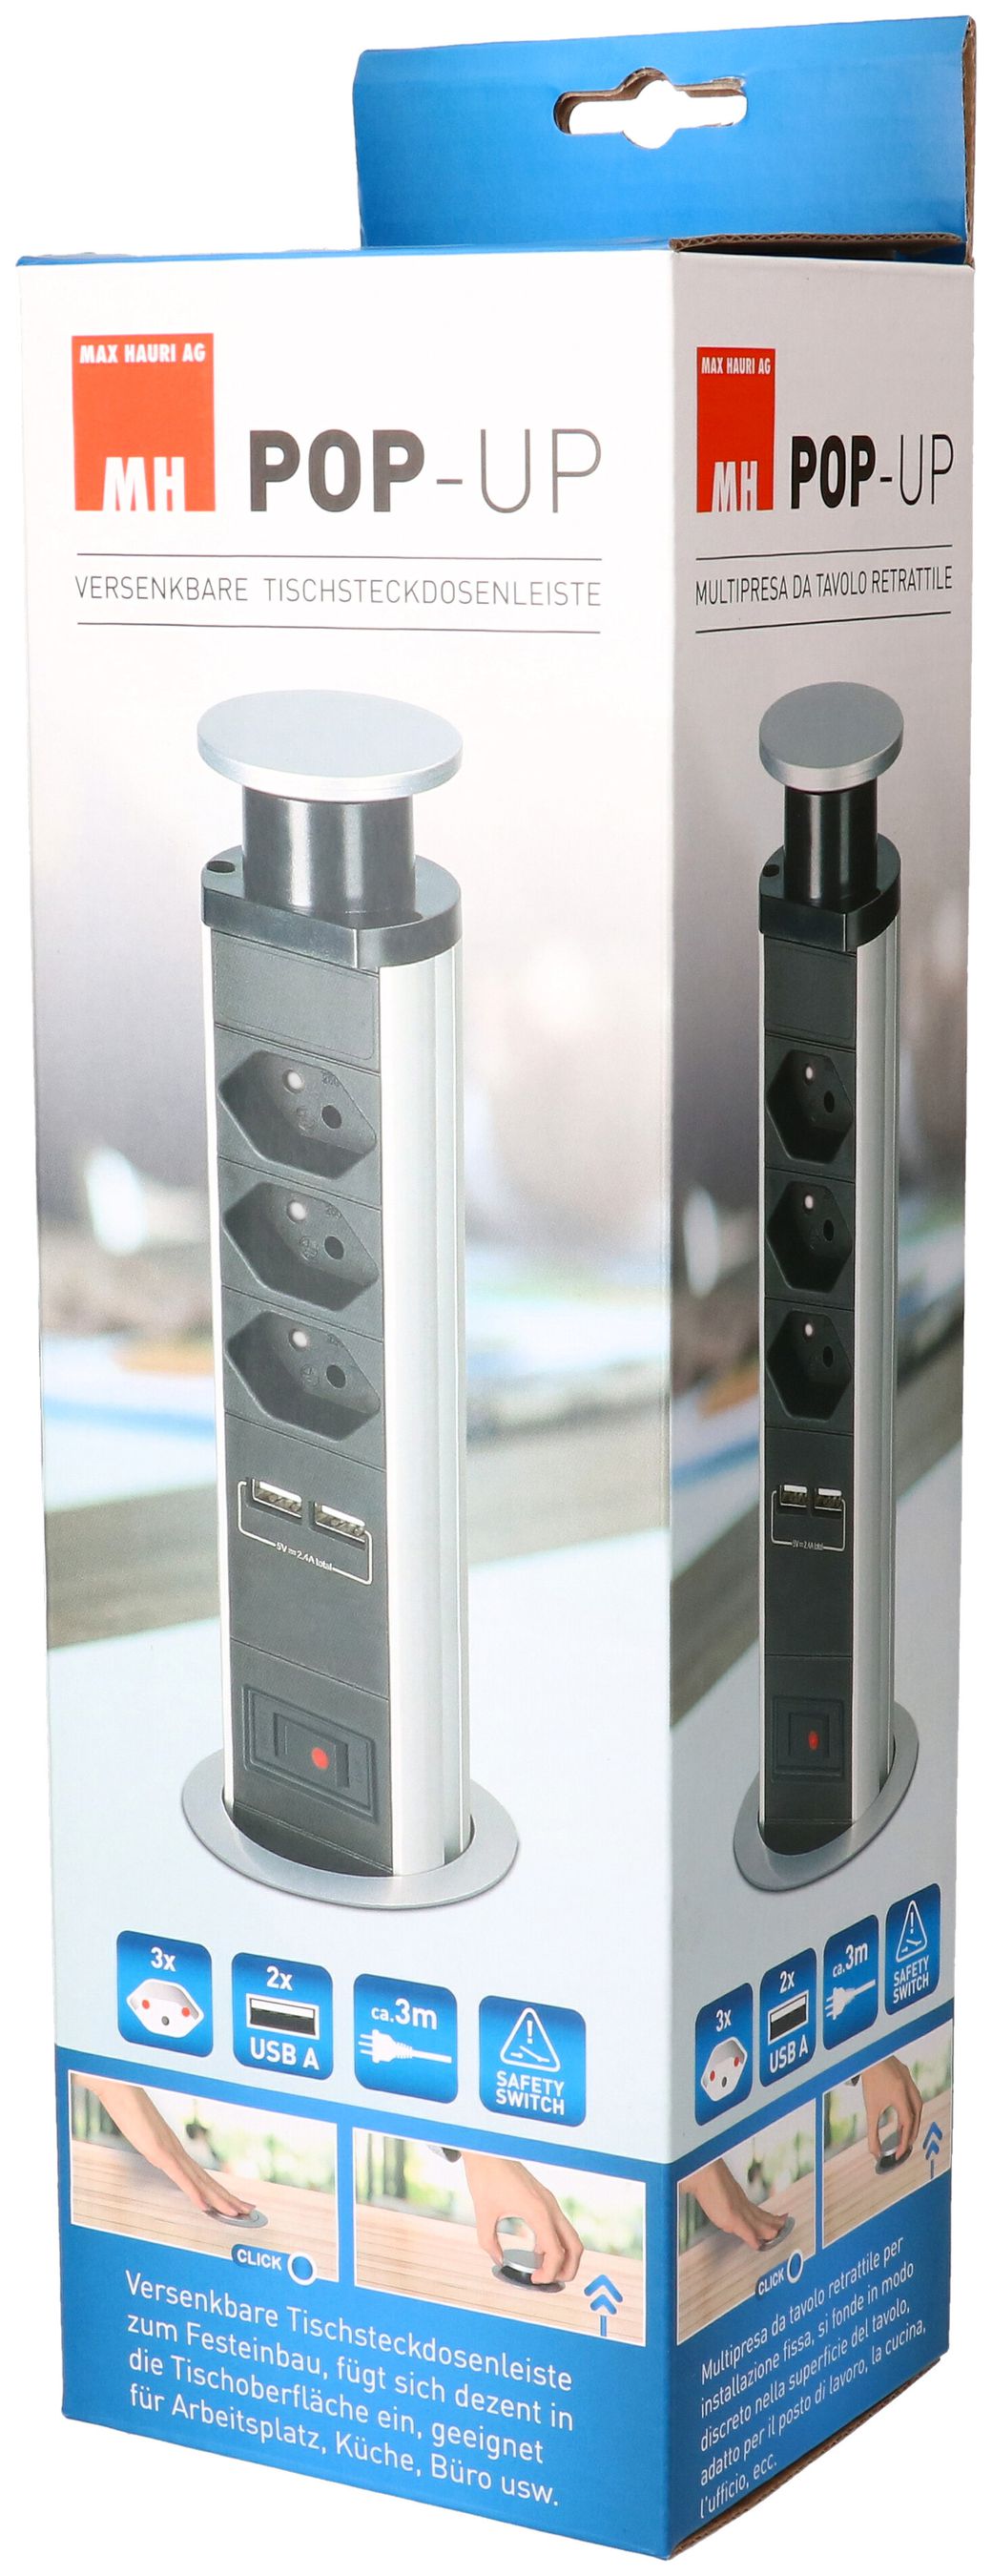 POP-UP Socket Tower / 3x Typ 13 with Shutter / 2x USB A 2.4A